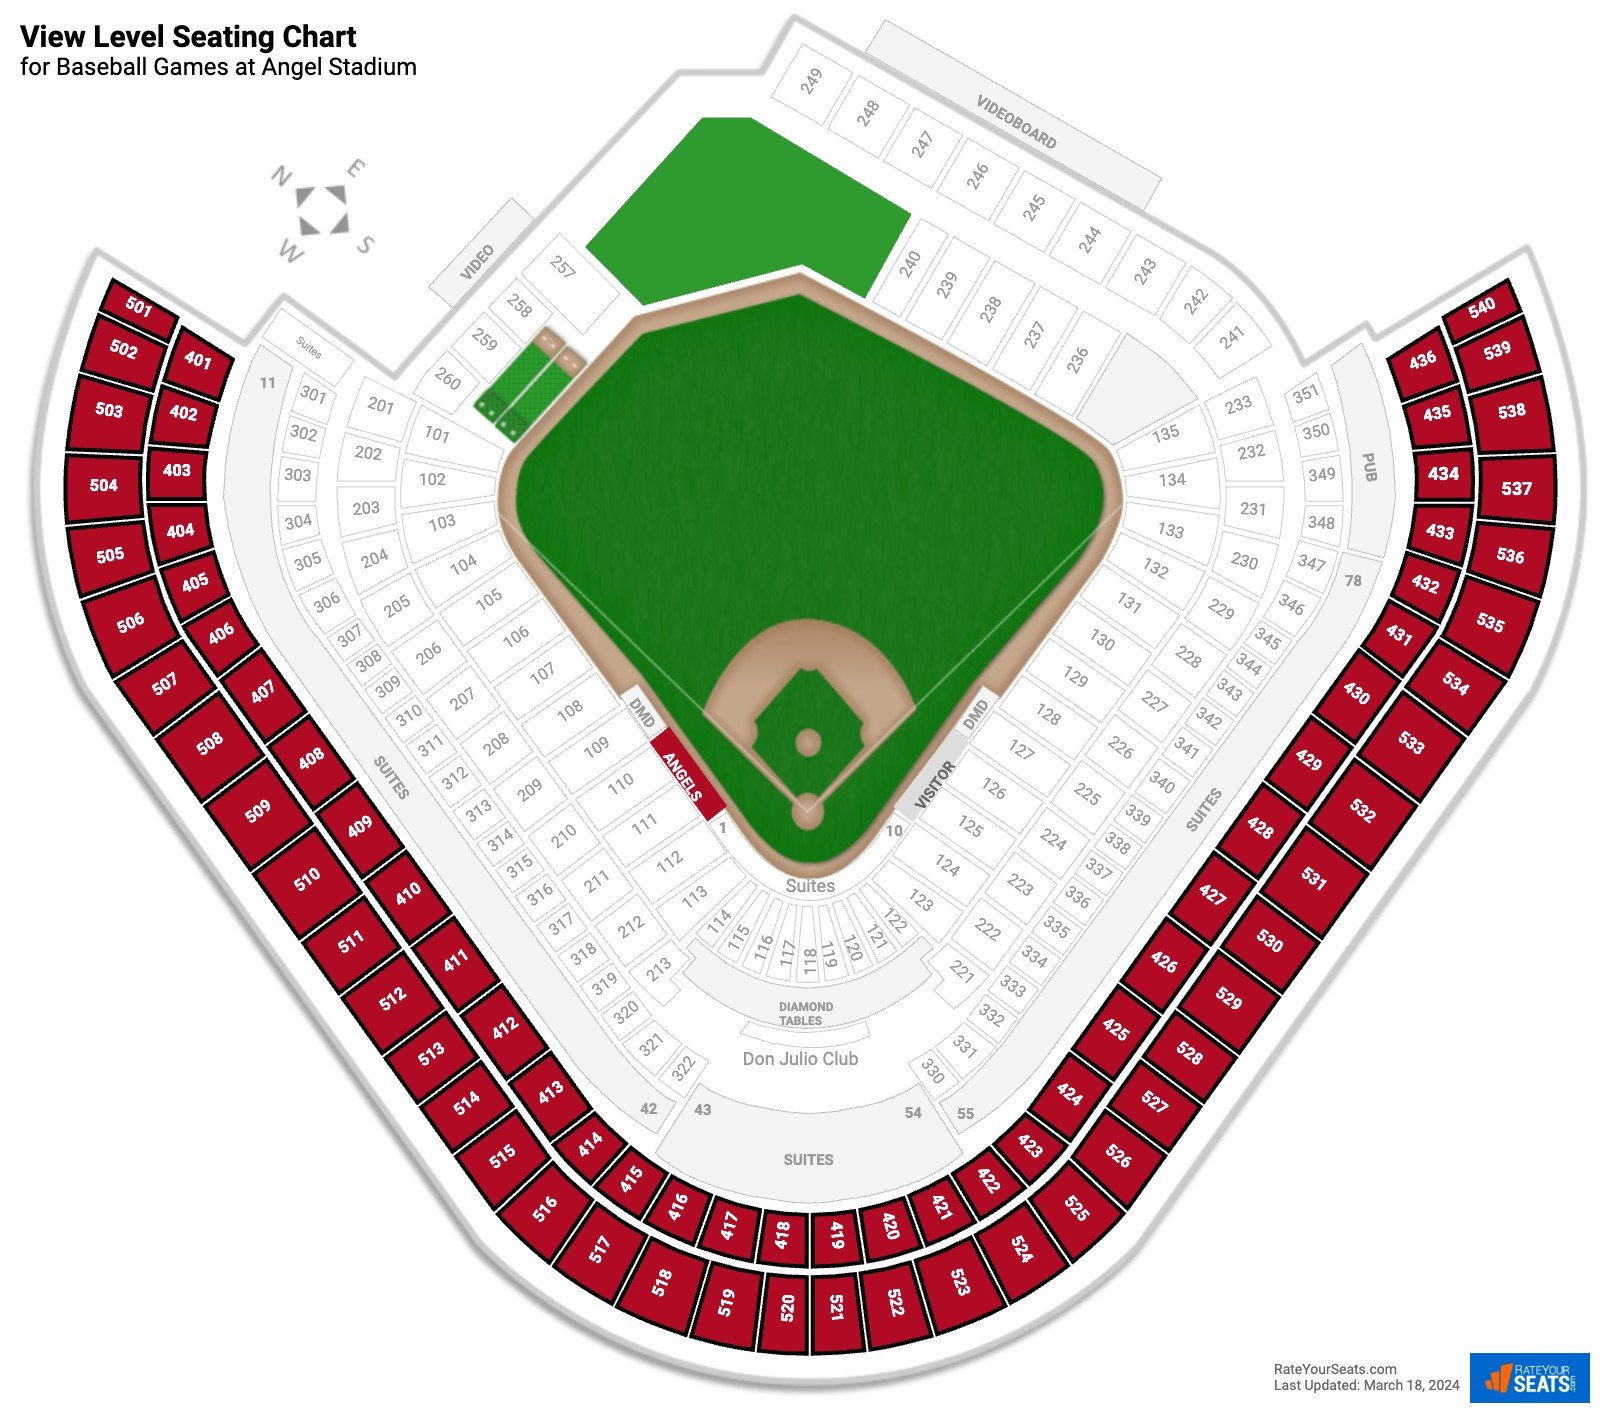 Baseball View Level Seating Chart at Angel Stadium